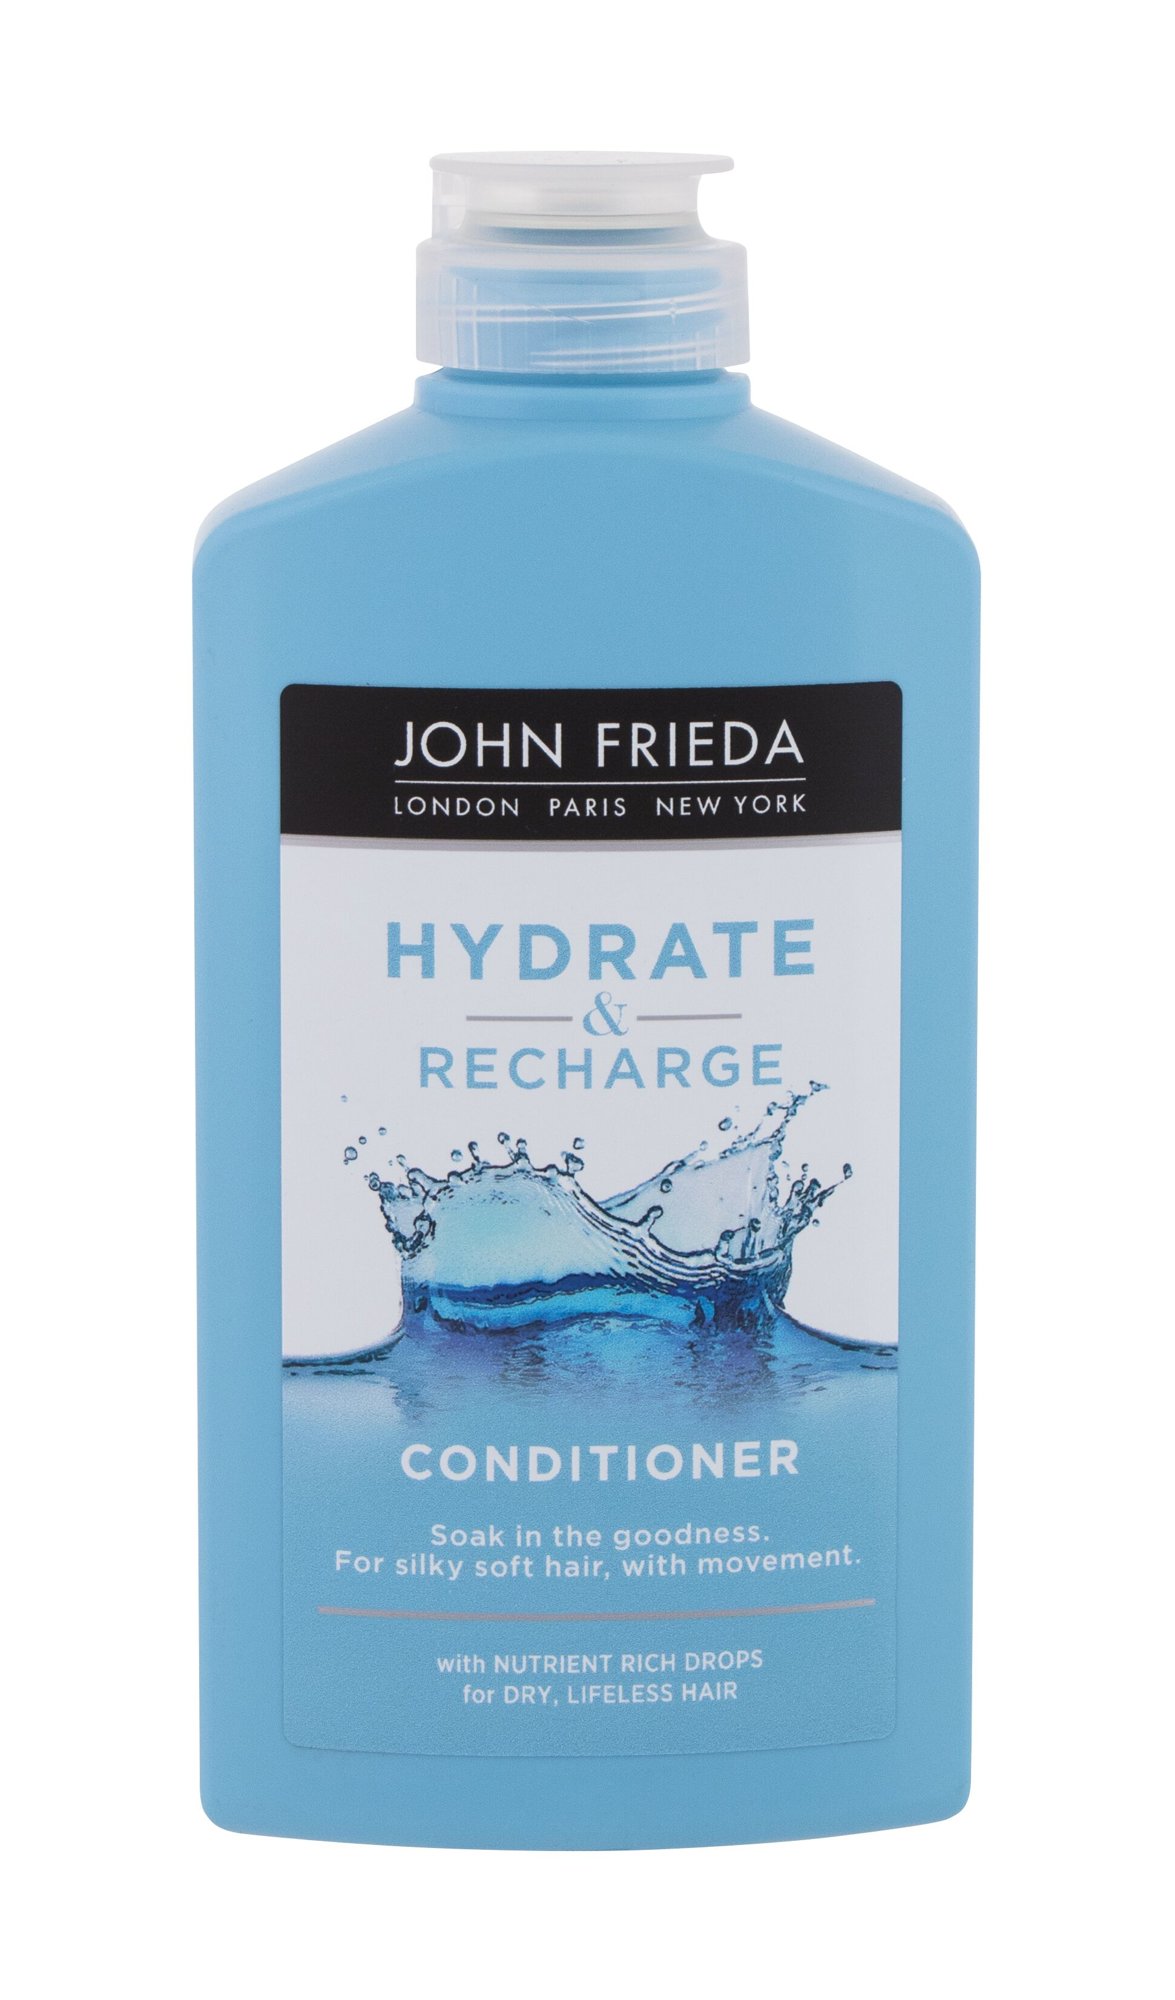 John Frieda Hydrate & Recharge kondicionierius